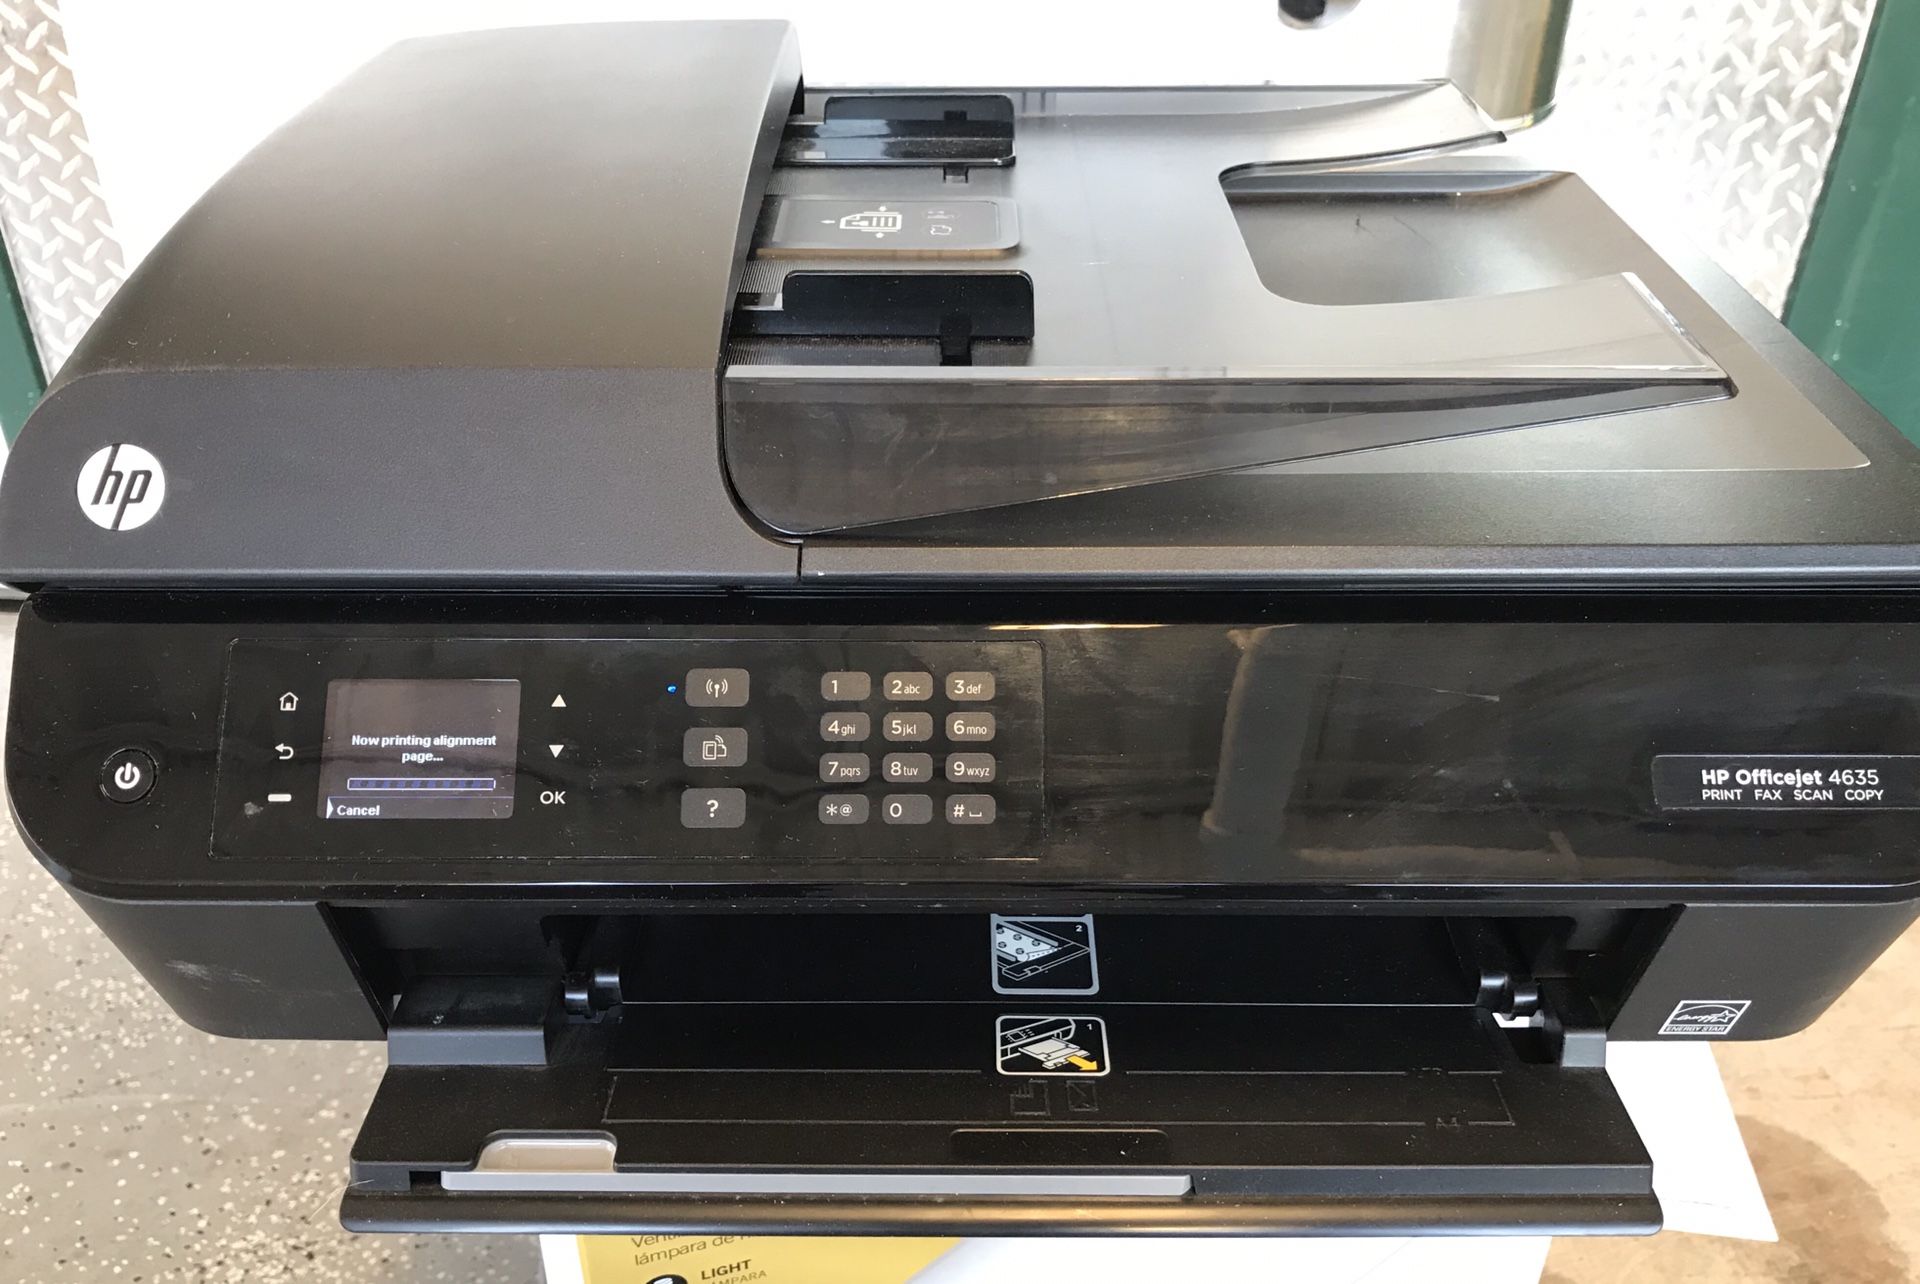 Hp Officejet 4635 Wireless E All In One Inkjet Printer Scan Copy Fax For Sale In Lanham Md 7151